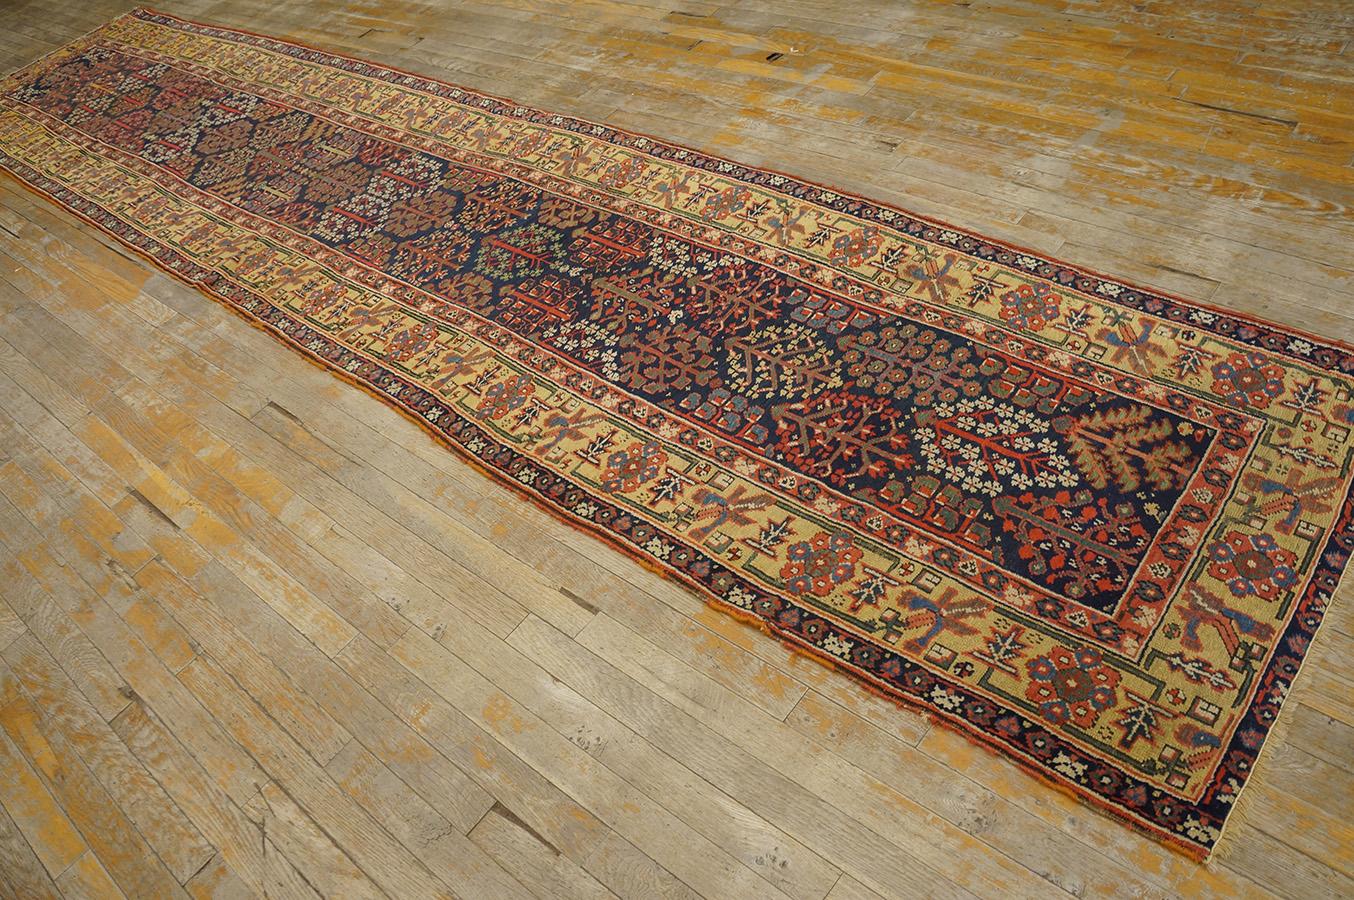 Hand-Knotted Mid 19th Century W. Persian Kurdish Shrub Runner Carpet (3' x 14'6'' - 90 x 443) For Sale